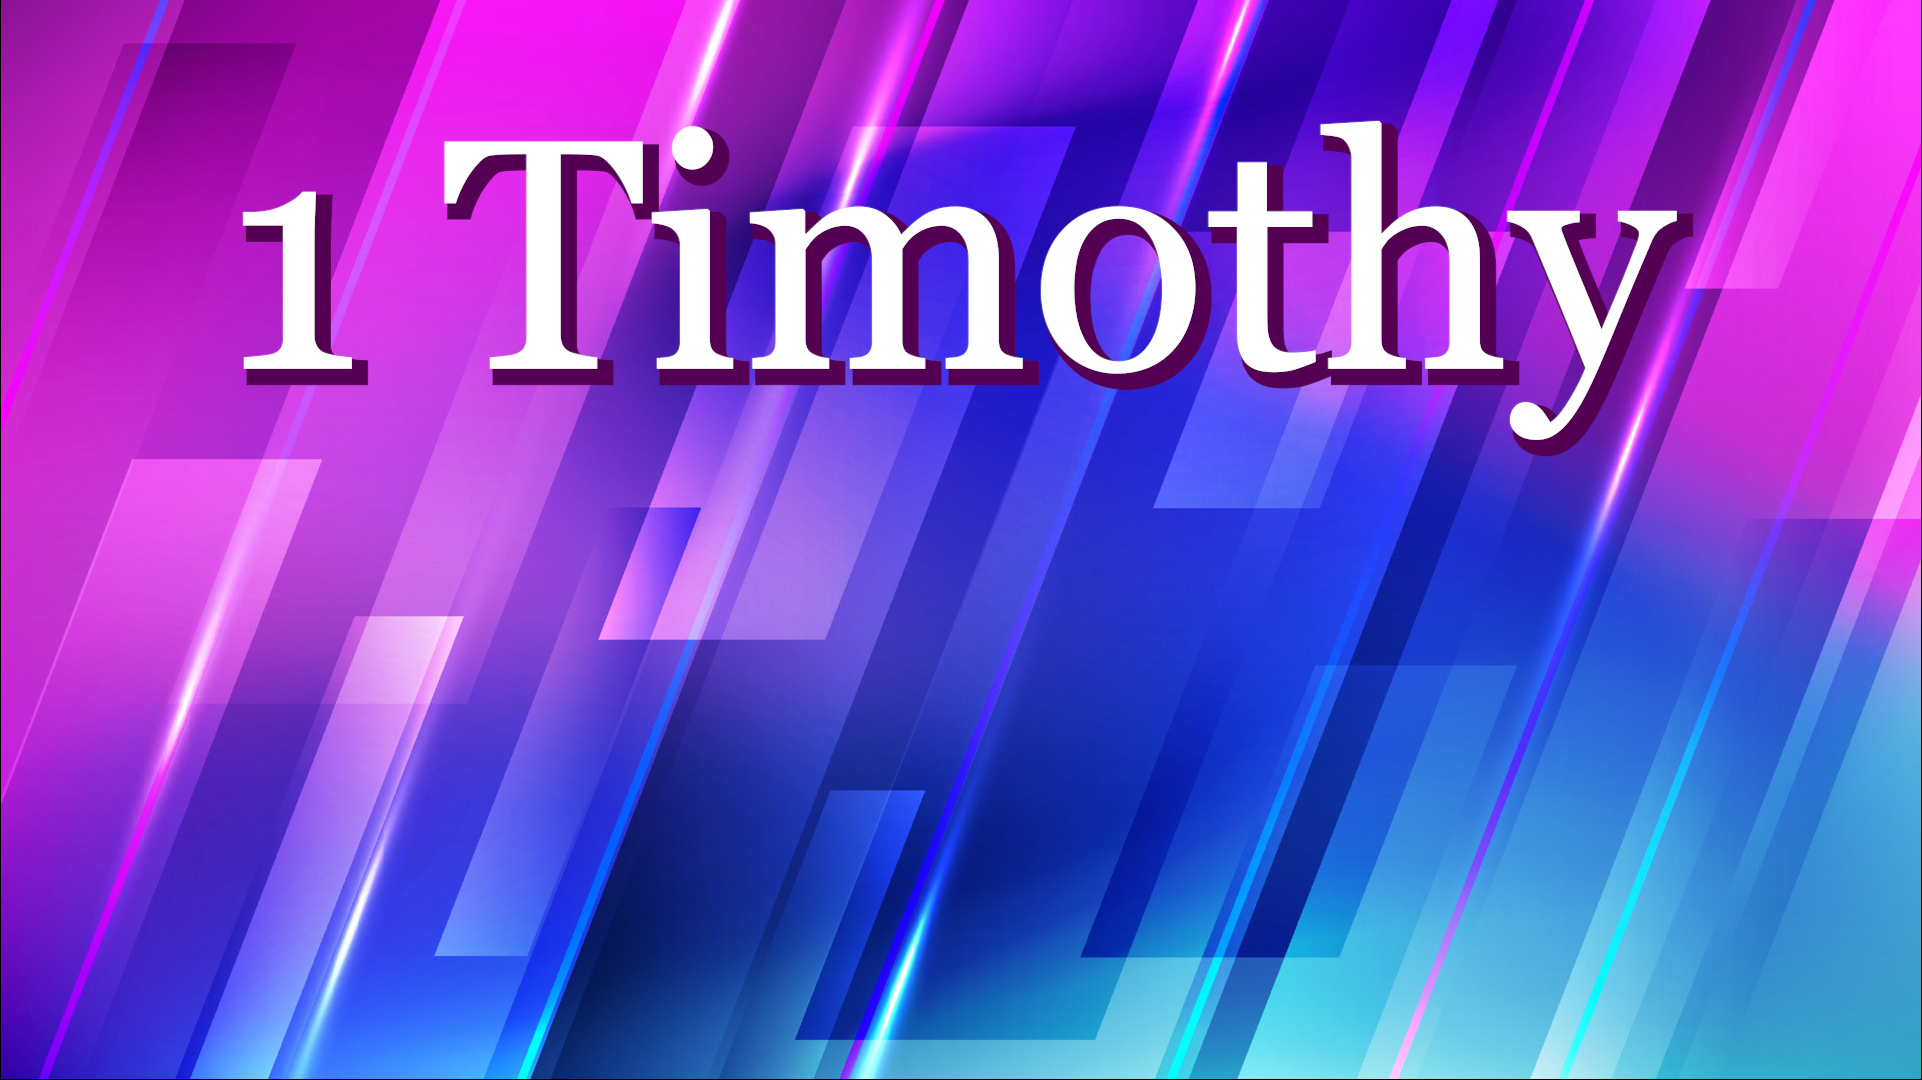 I Timothy